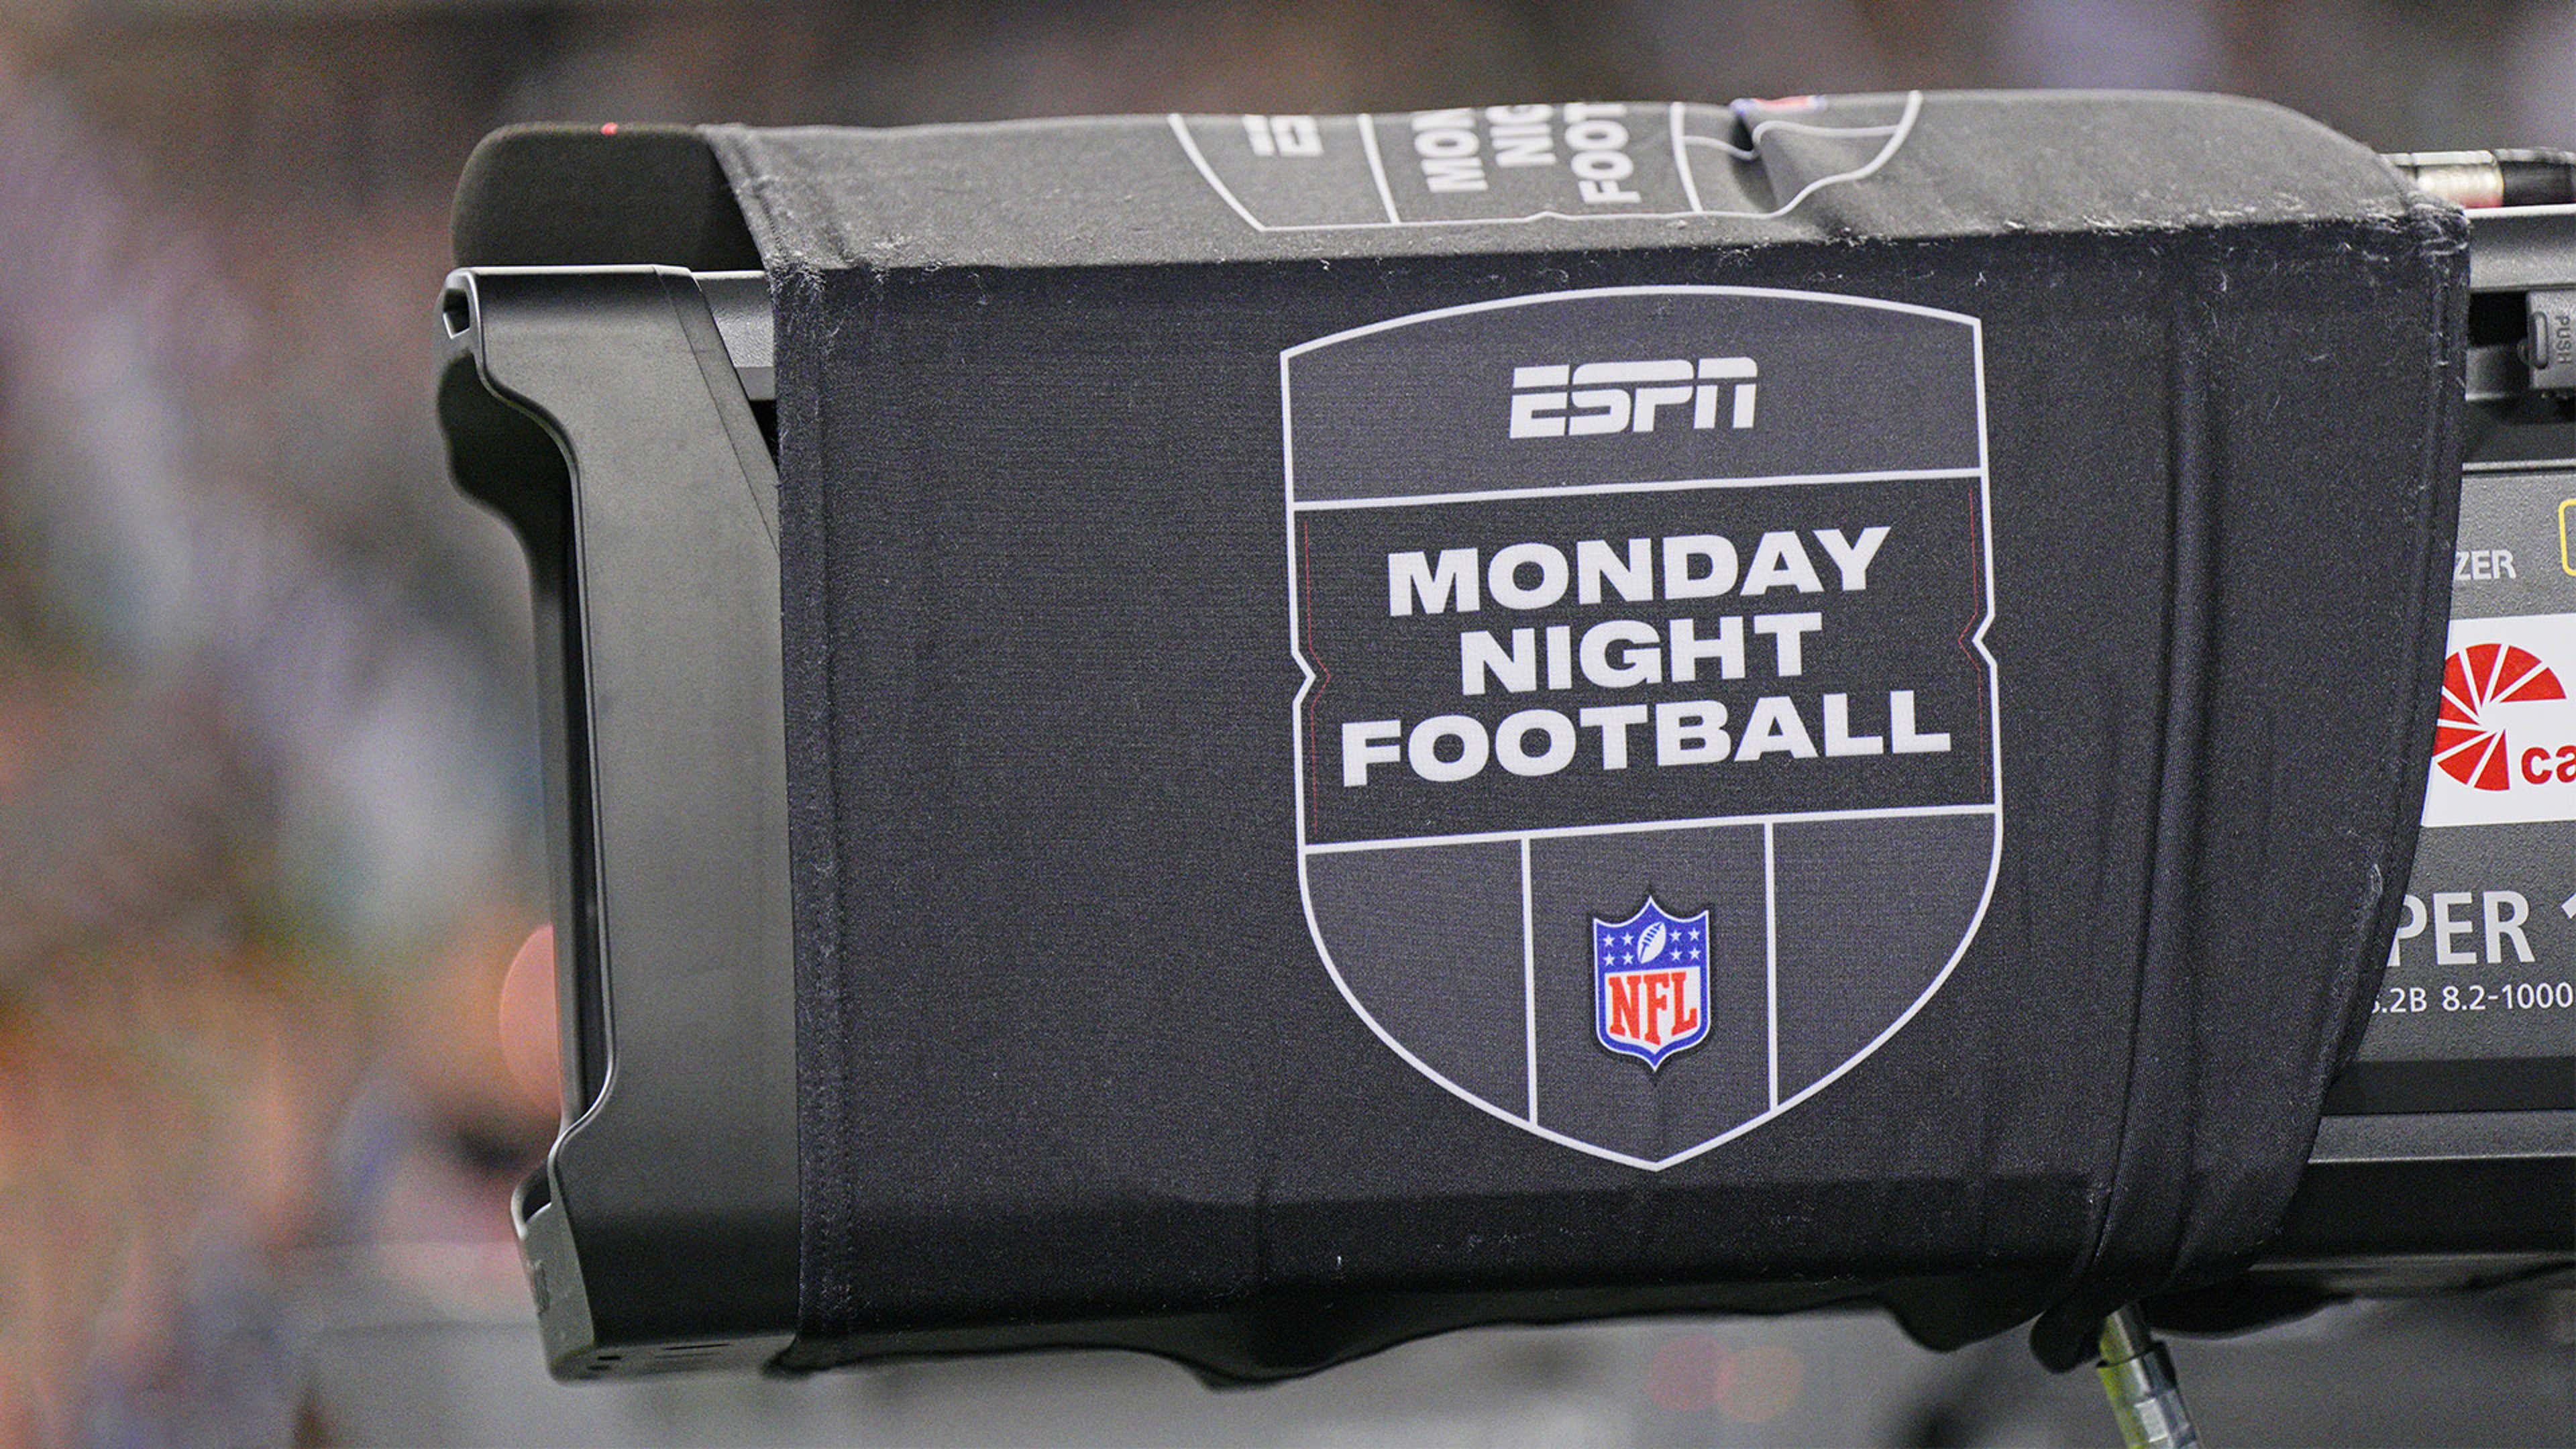 NFL Monday Night Football Schedule 2023